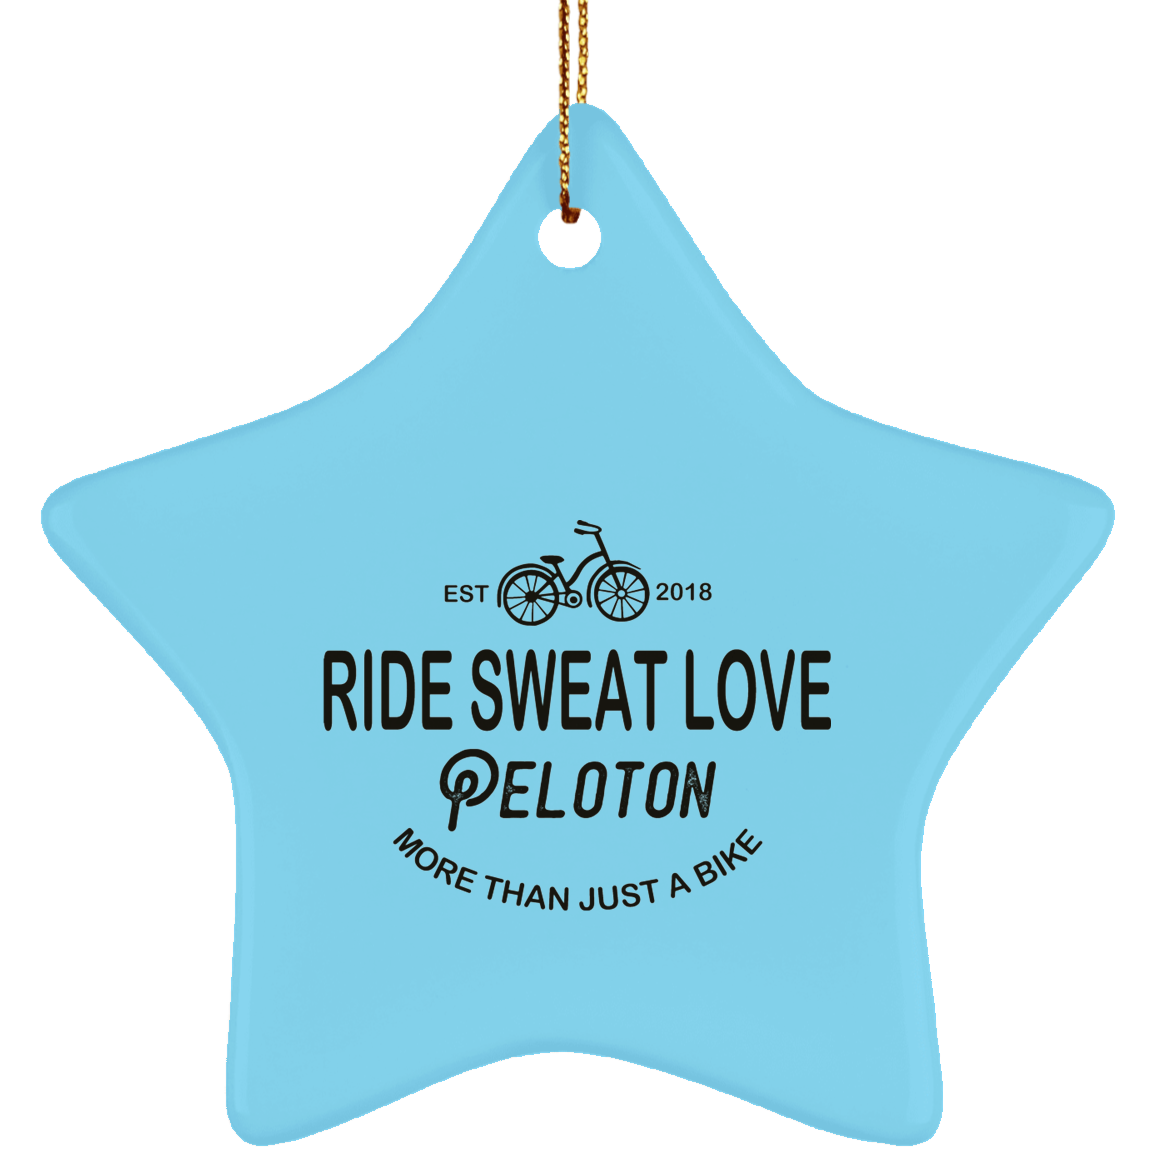 Ride Sweat Love Ceramic Star Ornament